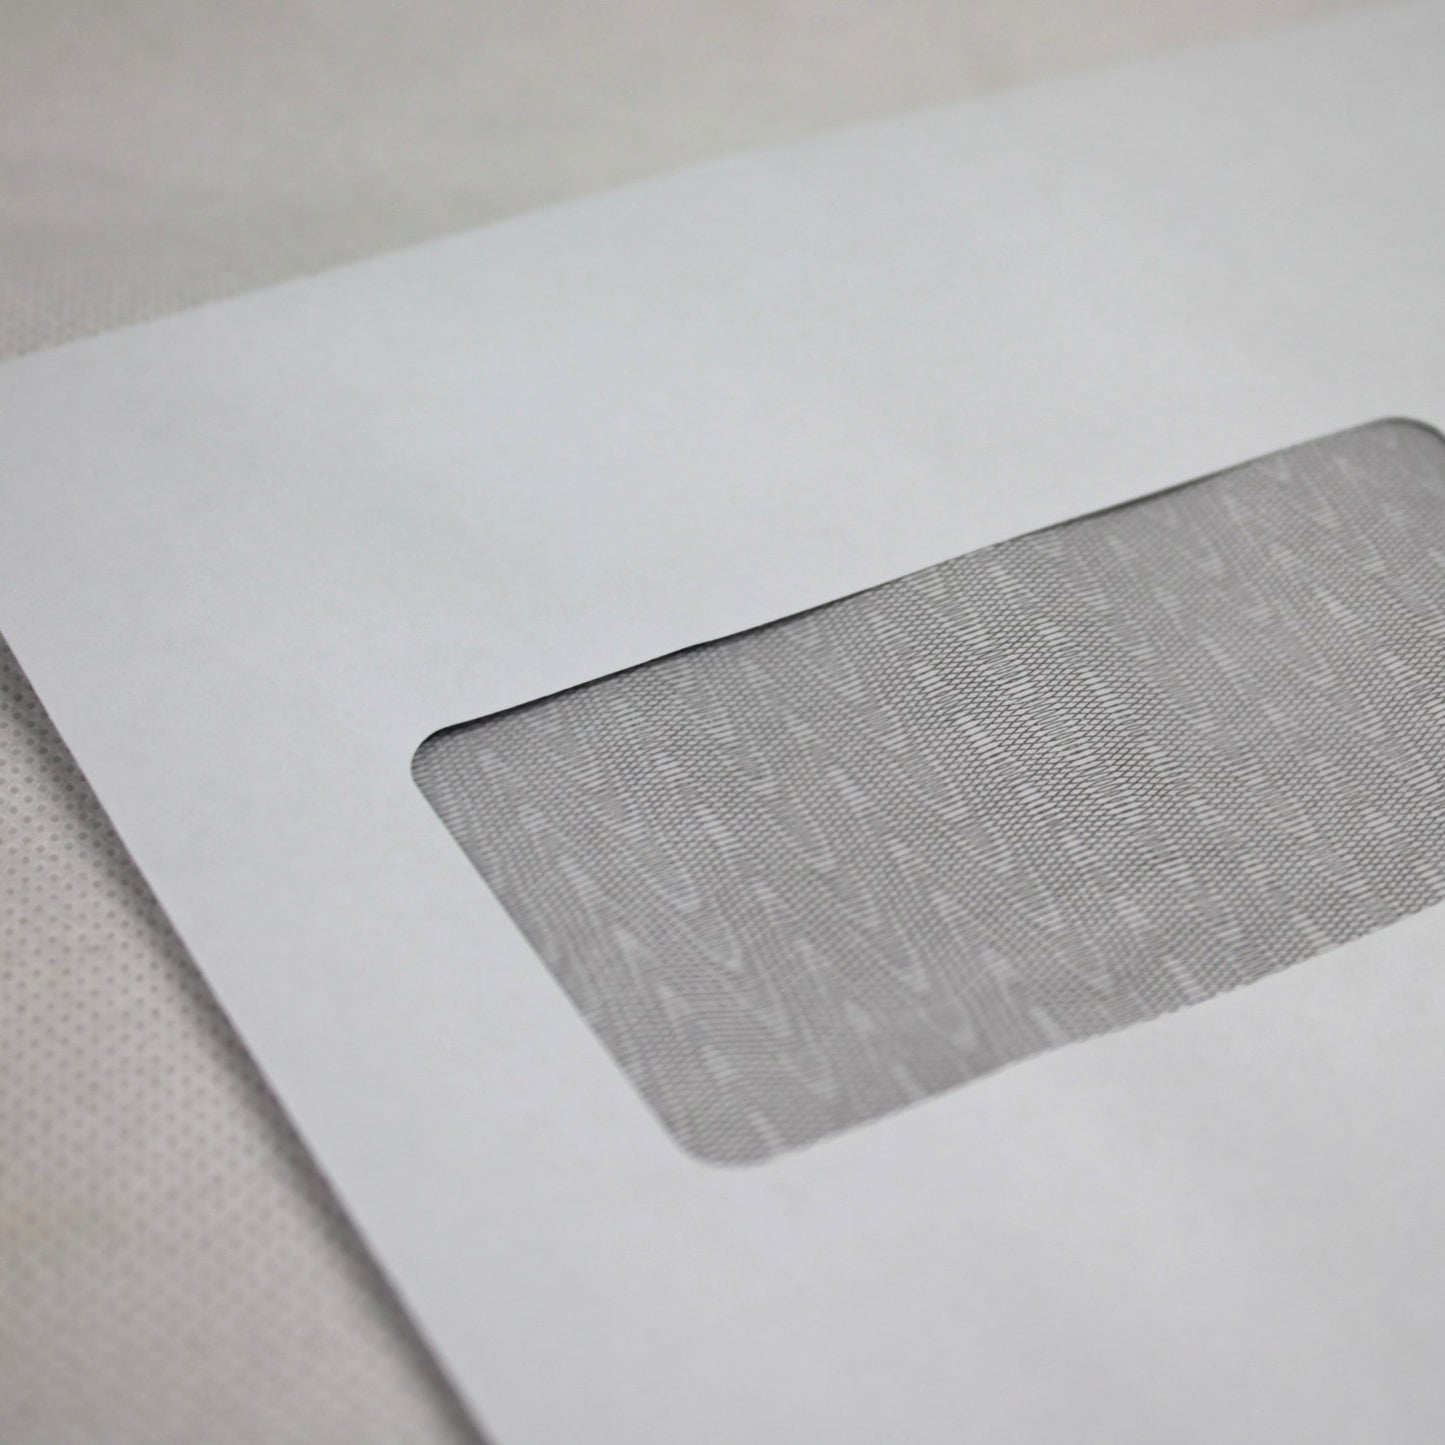 162x235mm C5+ White Gummed Envelopes (Window 45x90mm / Inside Seams)